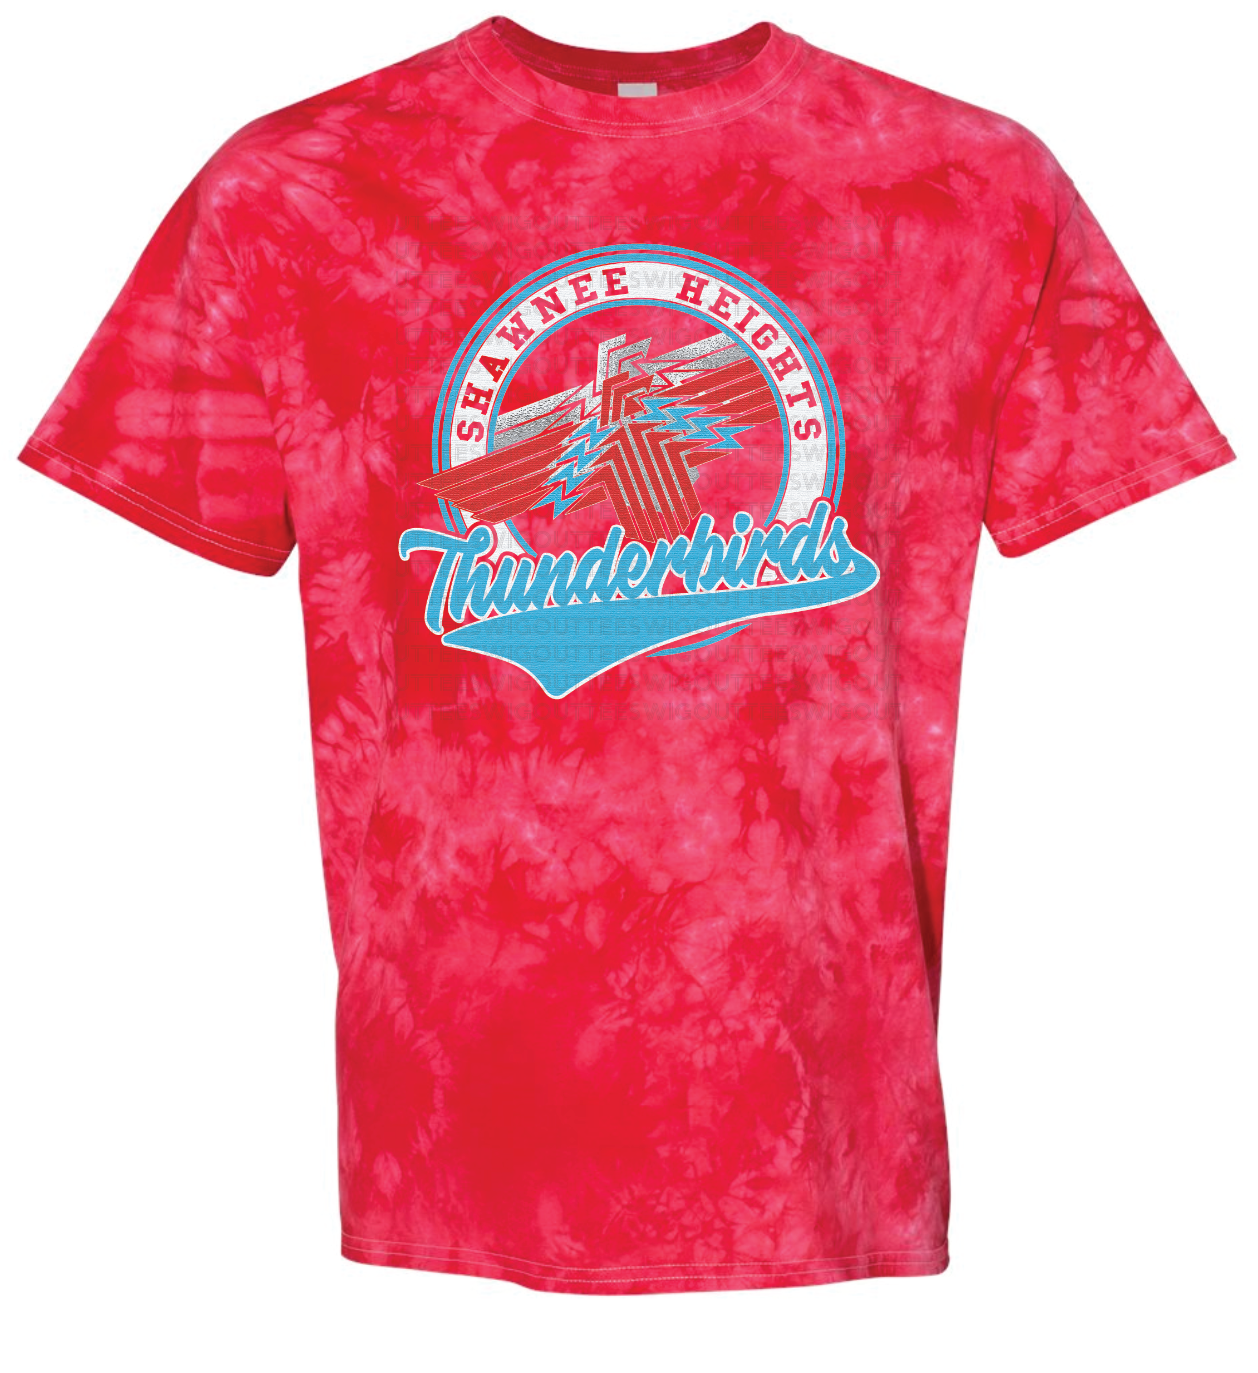 Shawnee Heights Crystal Tie Dye T-shirt